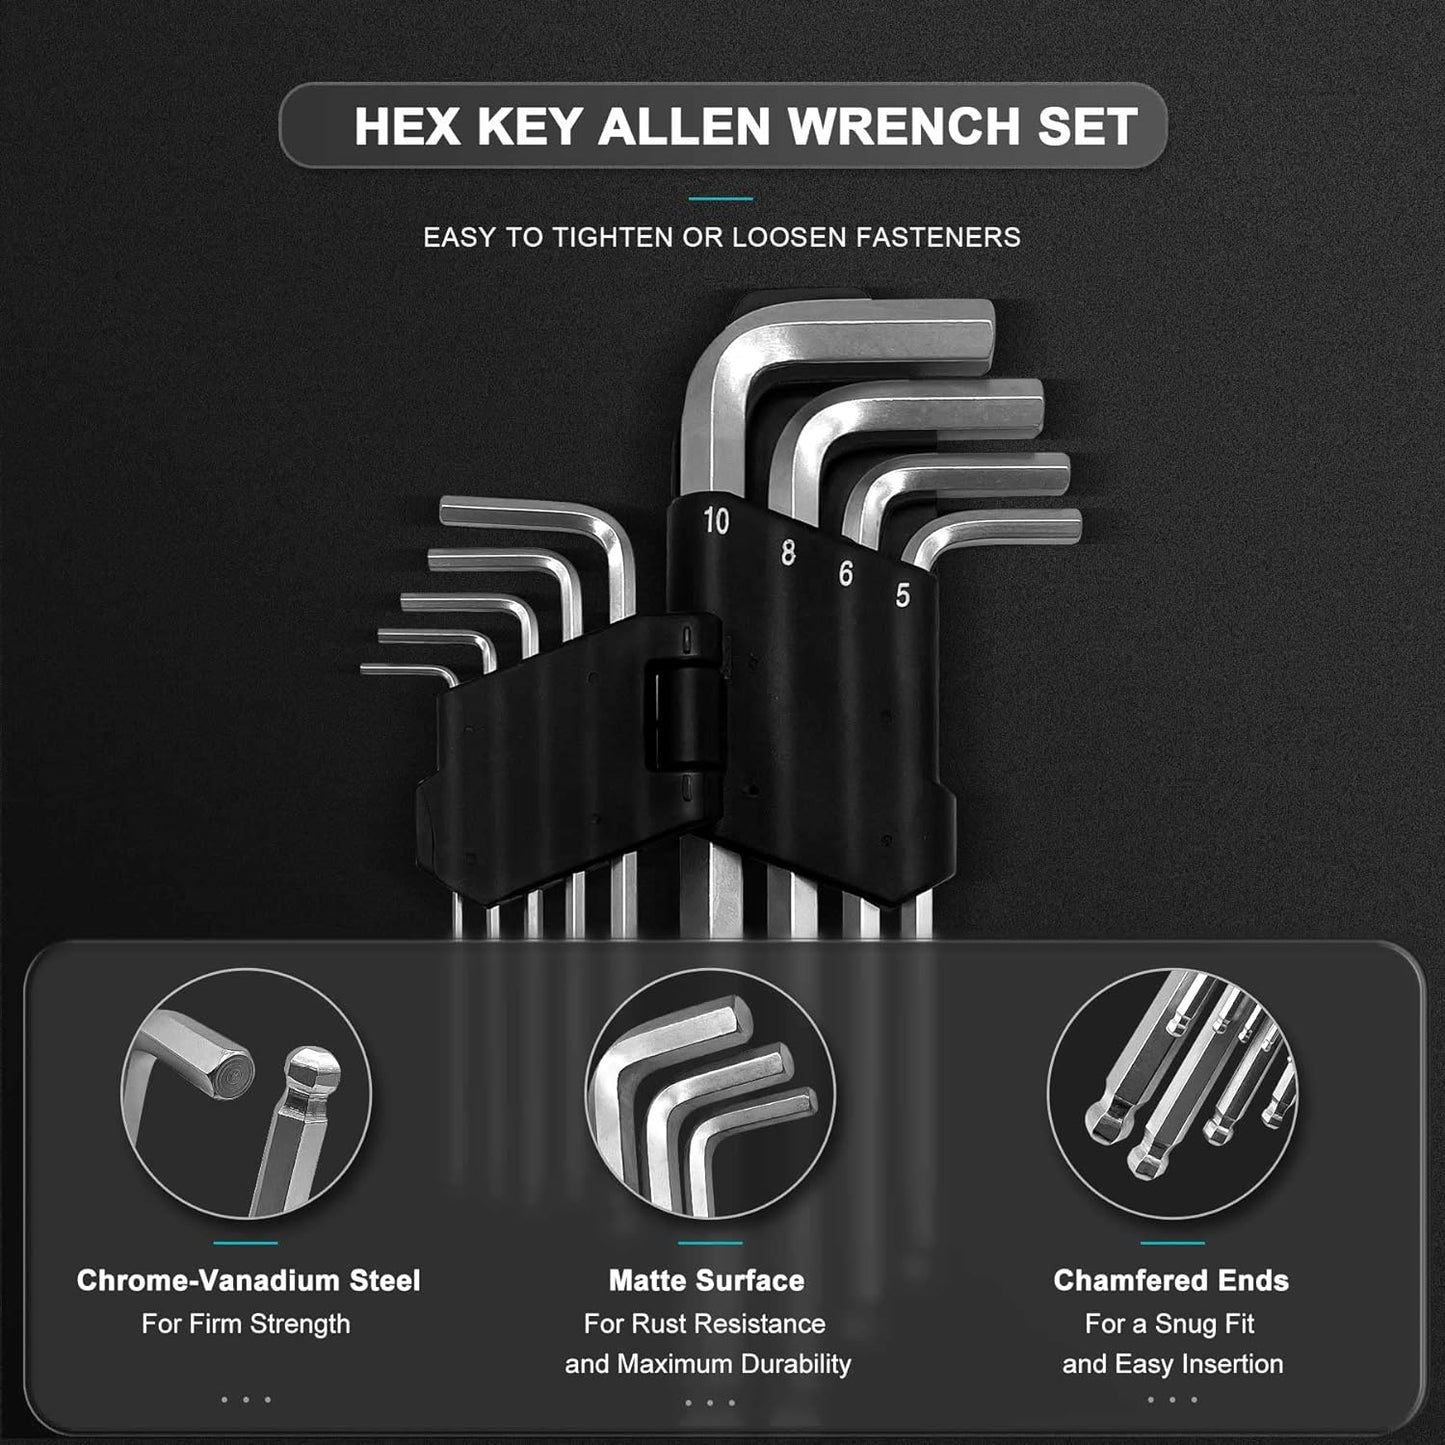 HAUTMEC Hex Key Allen Wrench Set, Ball End Hex Key Set, Metric L-Wrench, 9-Piece, Chrome Vanadium Steel, Industrial Grade, Strength Helping, HT0223-SS